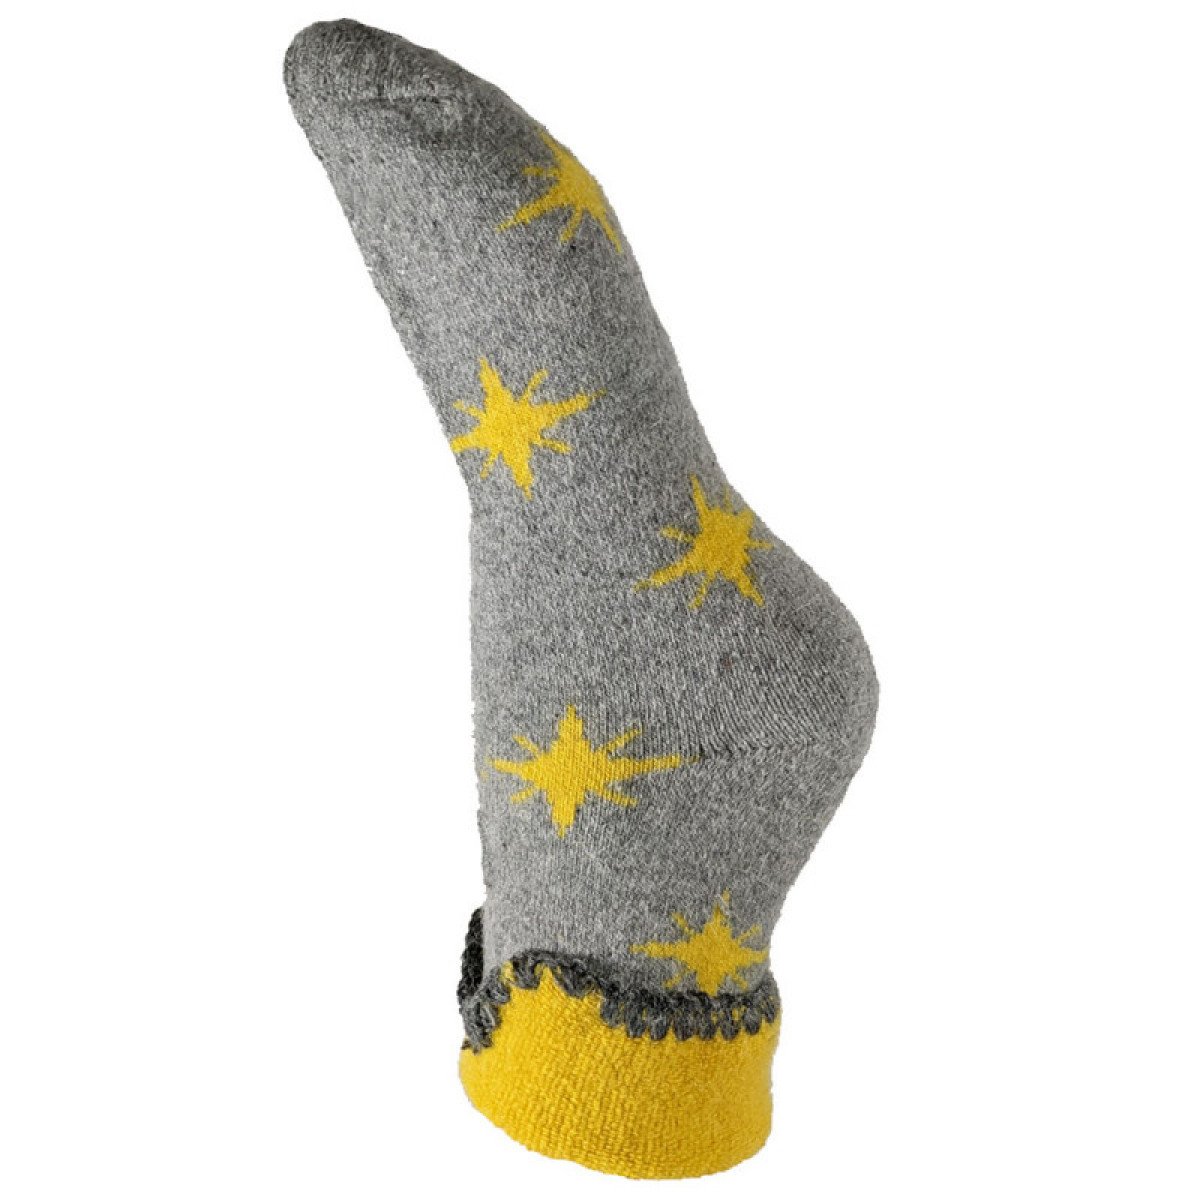 Joya Grey and Yellow Star Ladies Cuff Socks